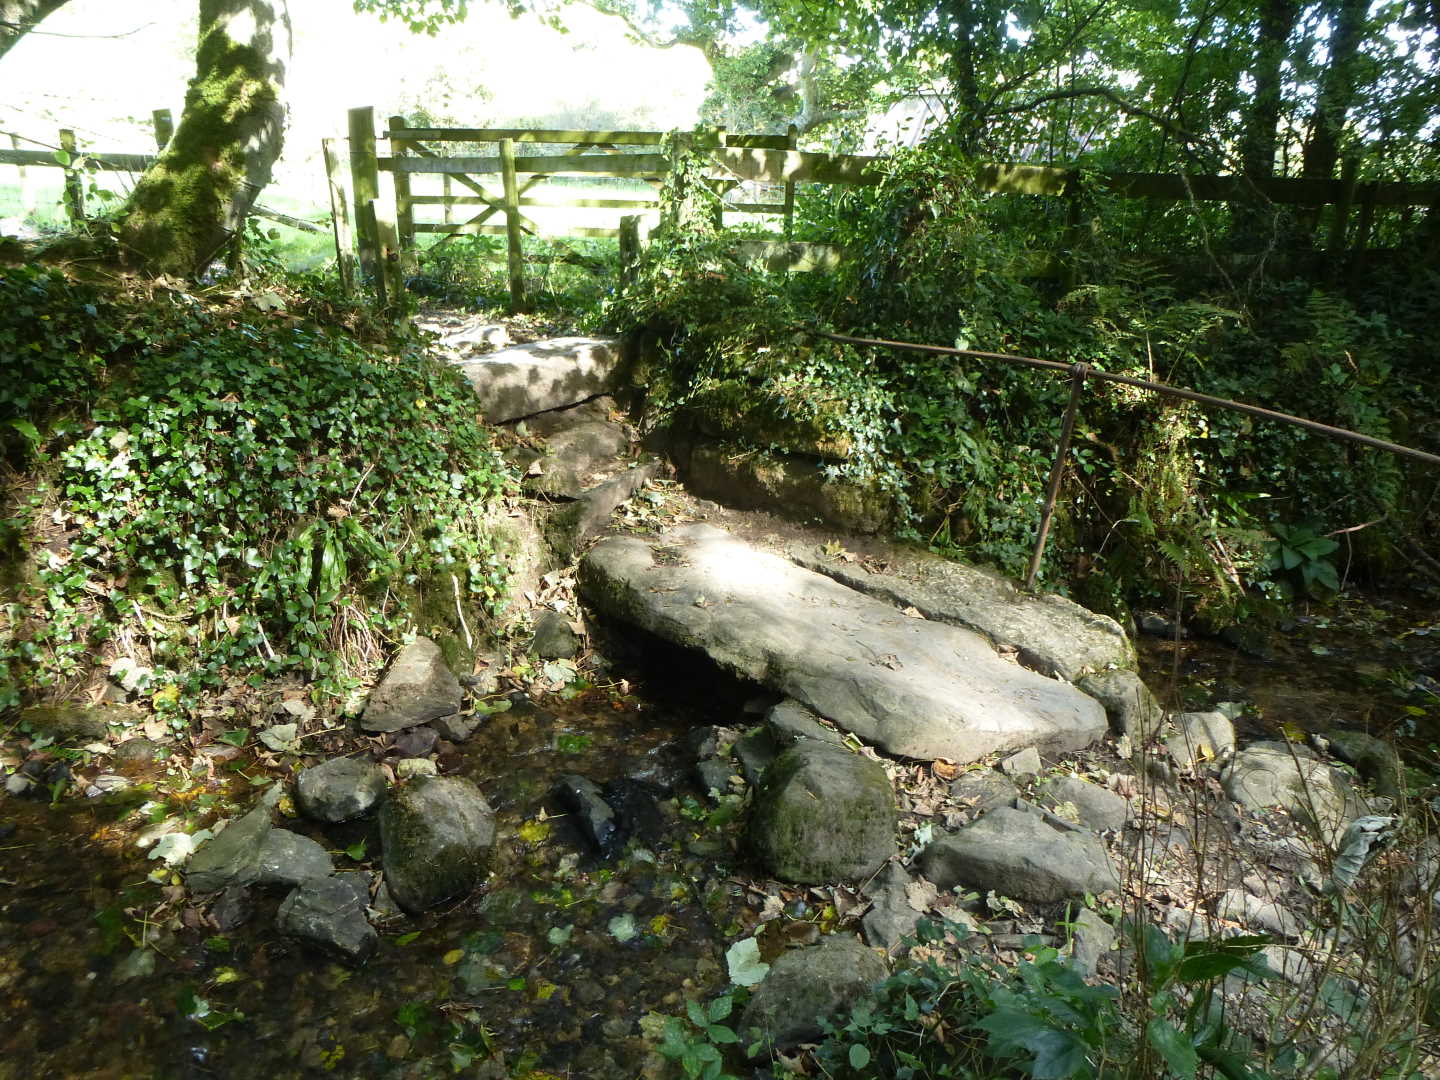 A small stone footbridge crossing a stream